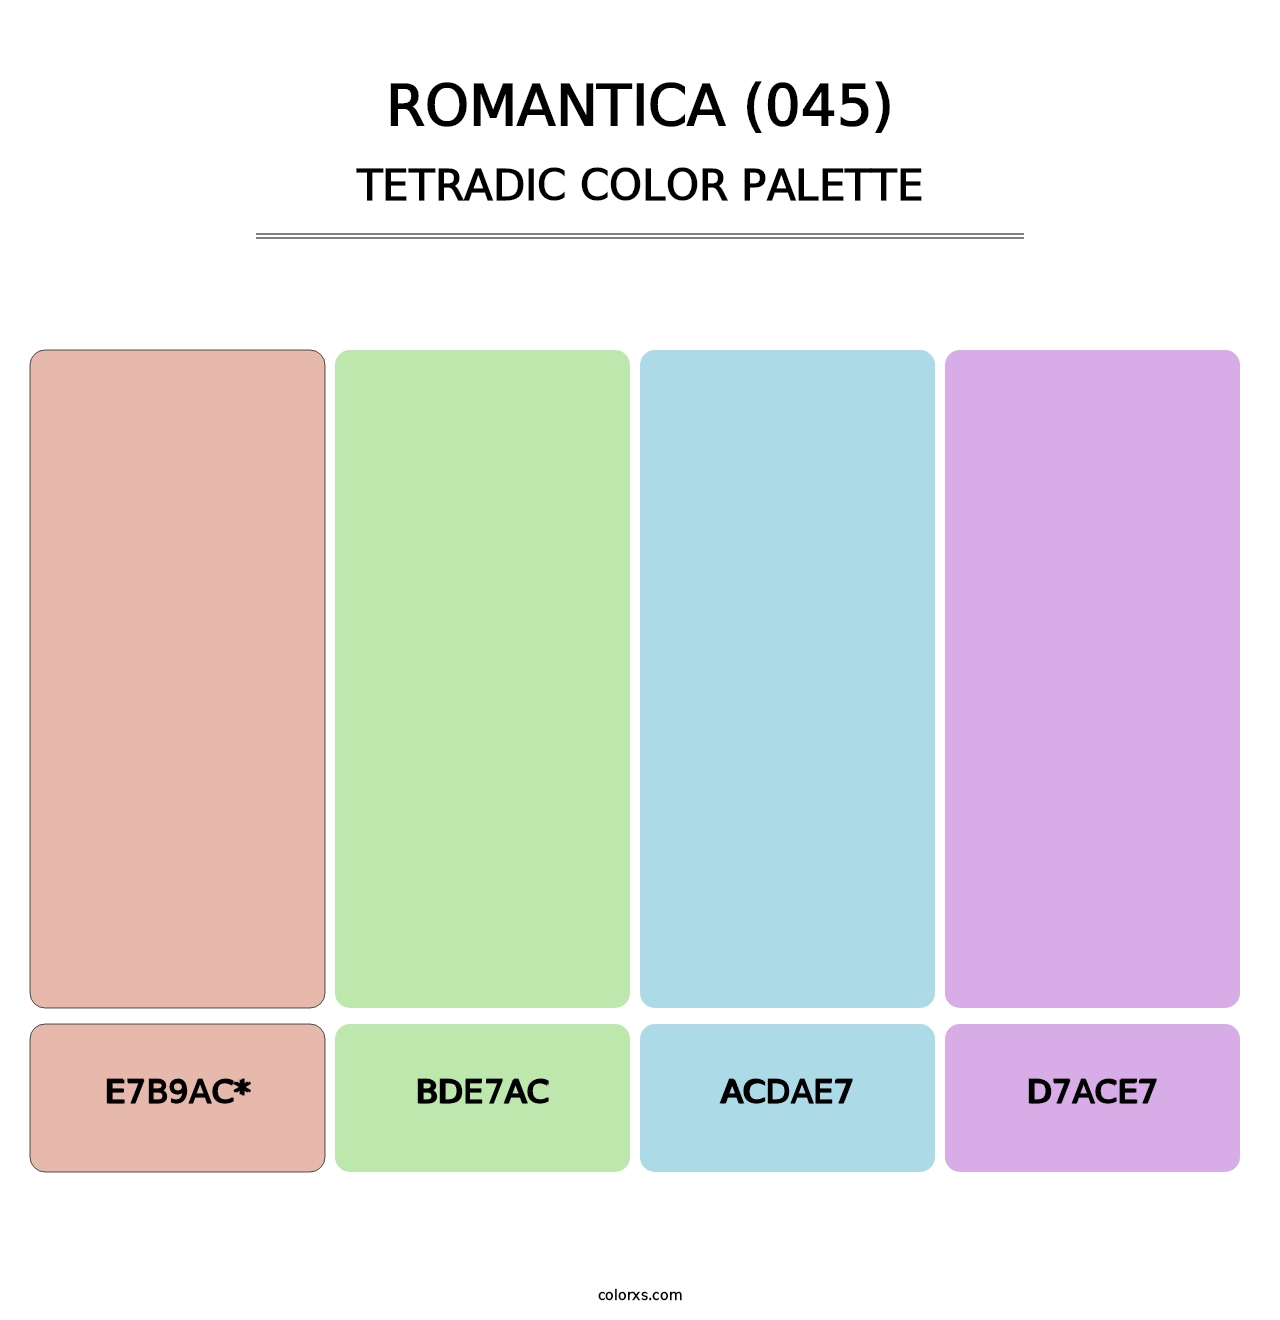 Romantica (045) - Tetradic Color Palette